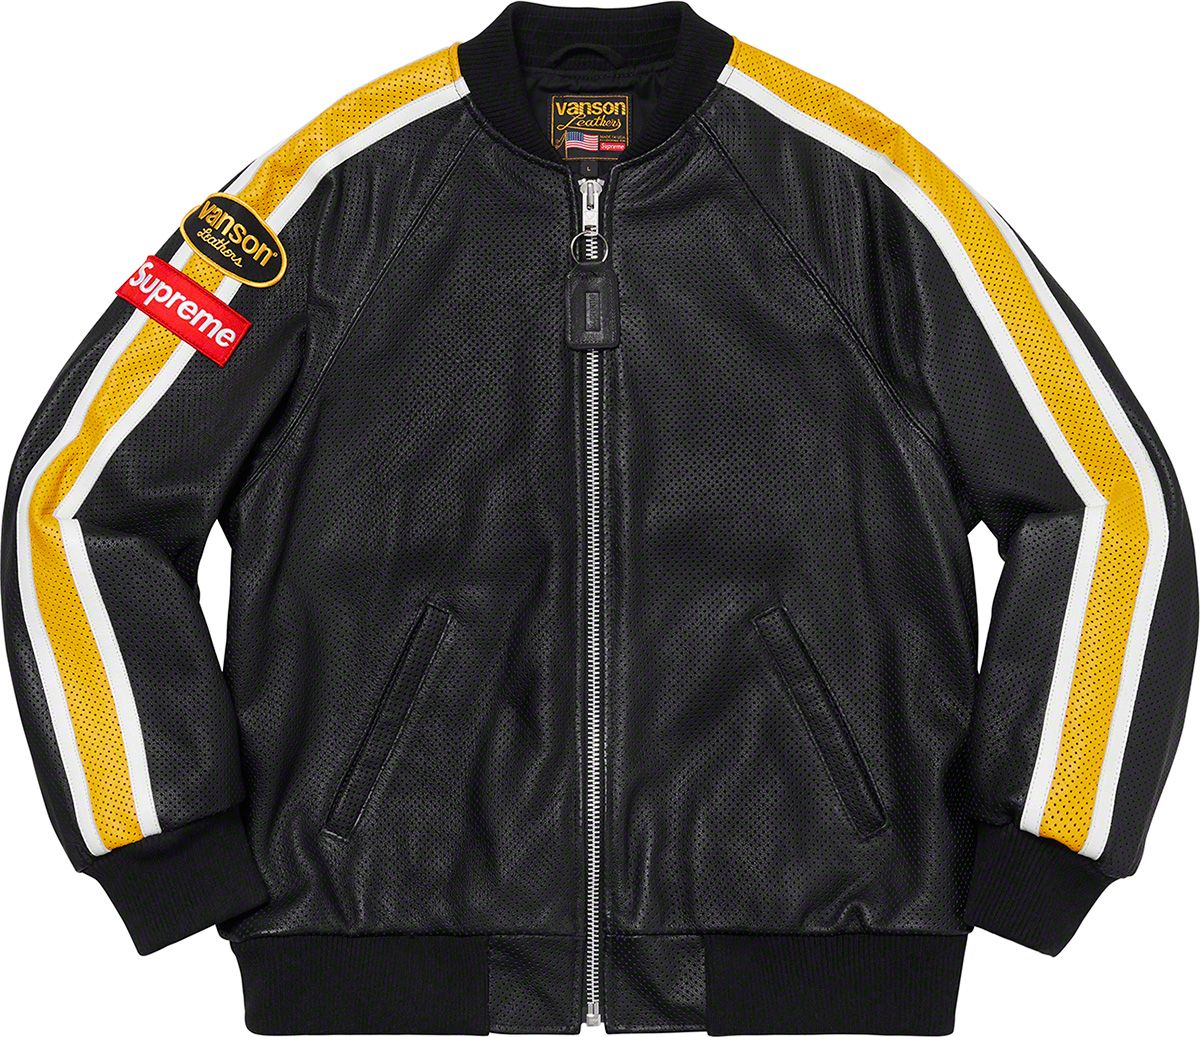 Supreme®/Vanson Leathers® Perforated Bomber Jacket - Spring/Summer 